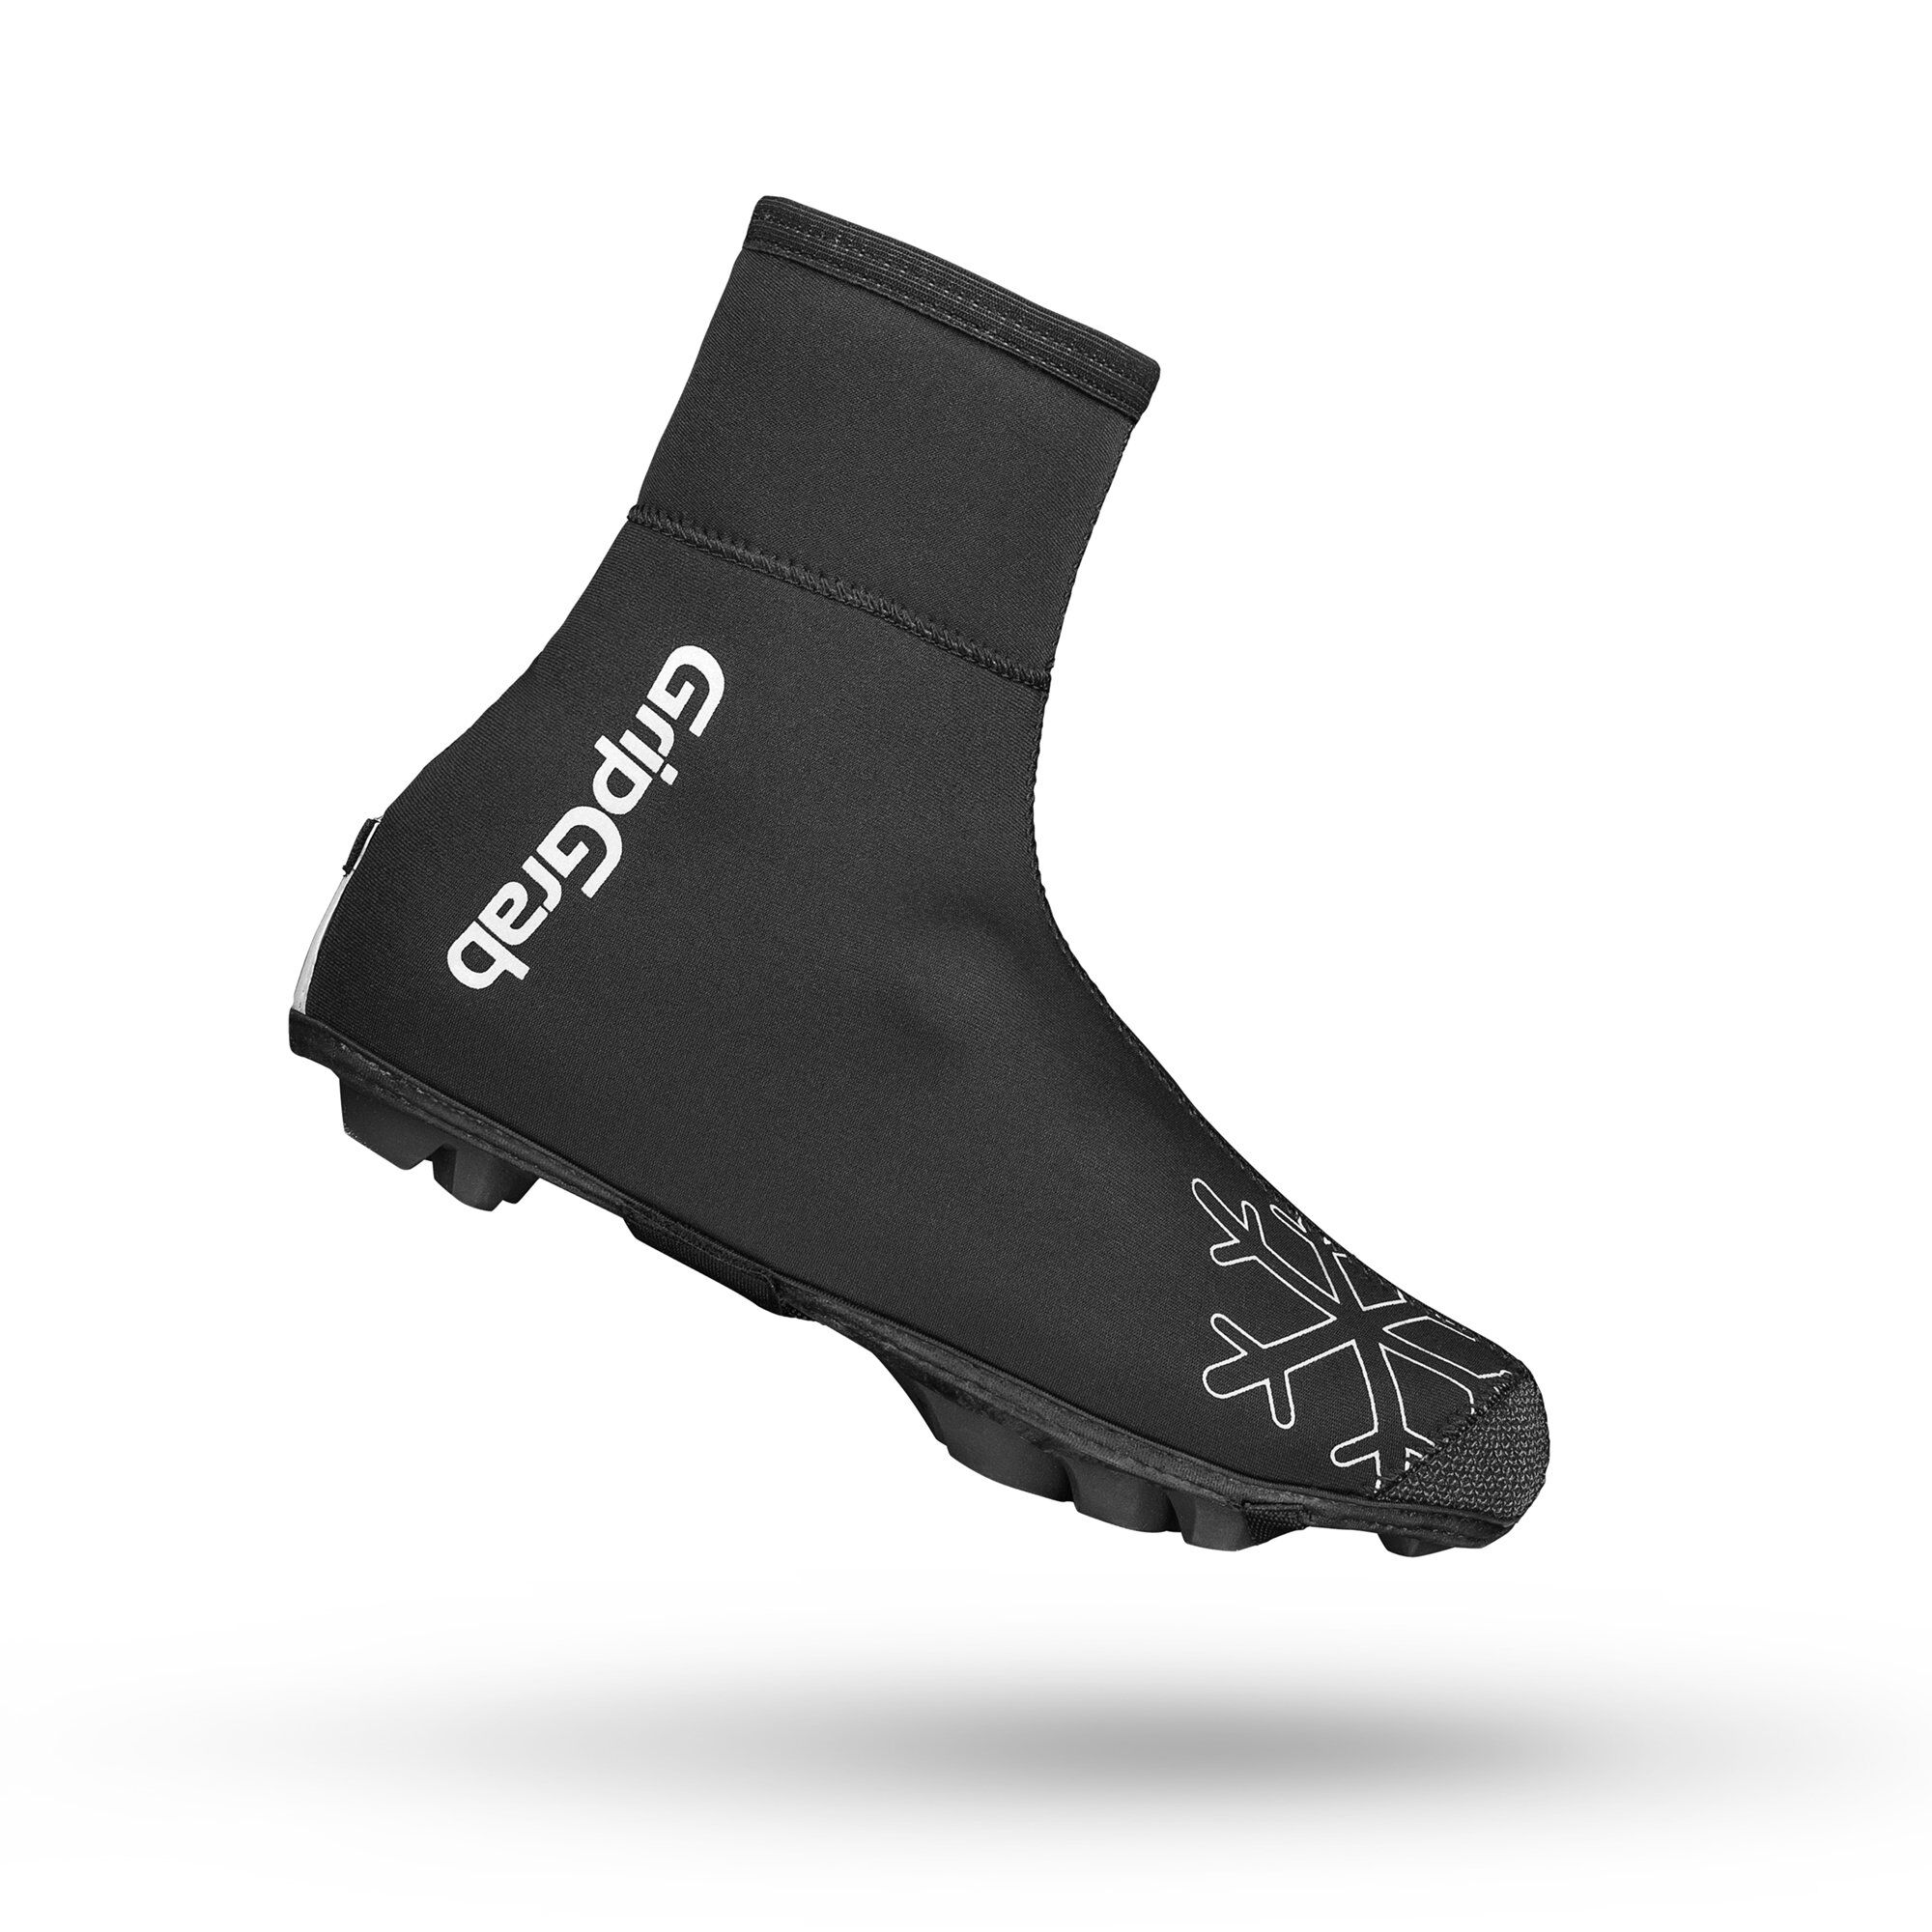 Grip Grab Arctic X Waterproof Deep Winter MTB/CX Shoe Cover - Cycling overshoes